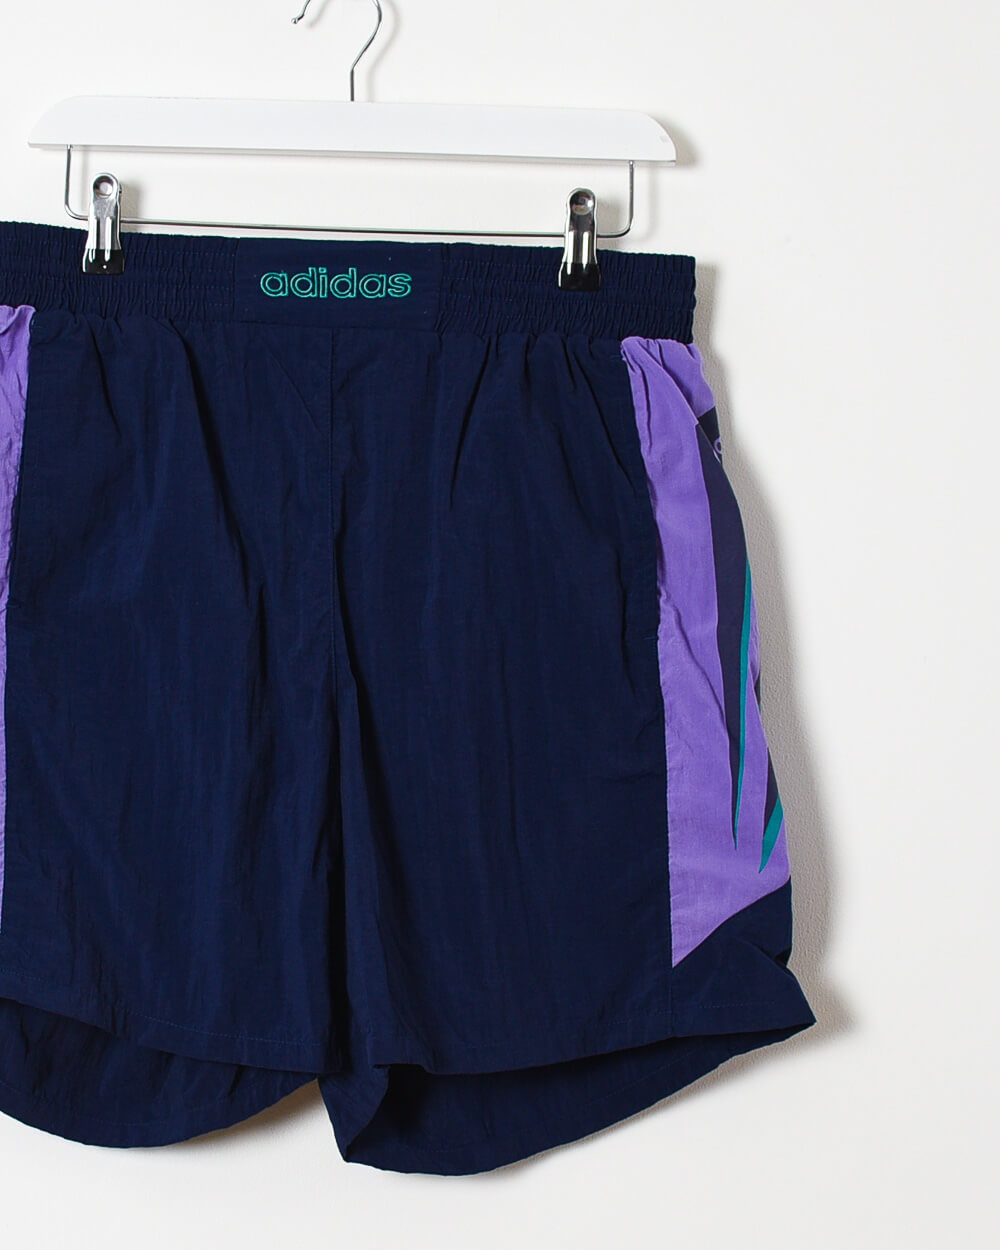 Navy Adidas Shorts - W32